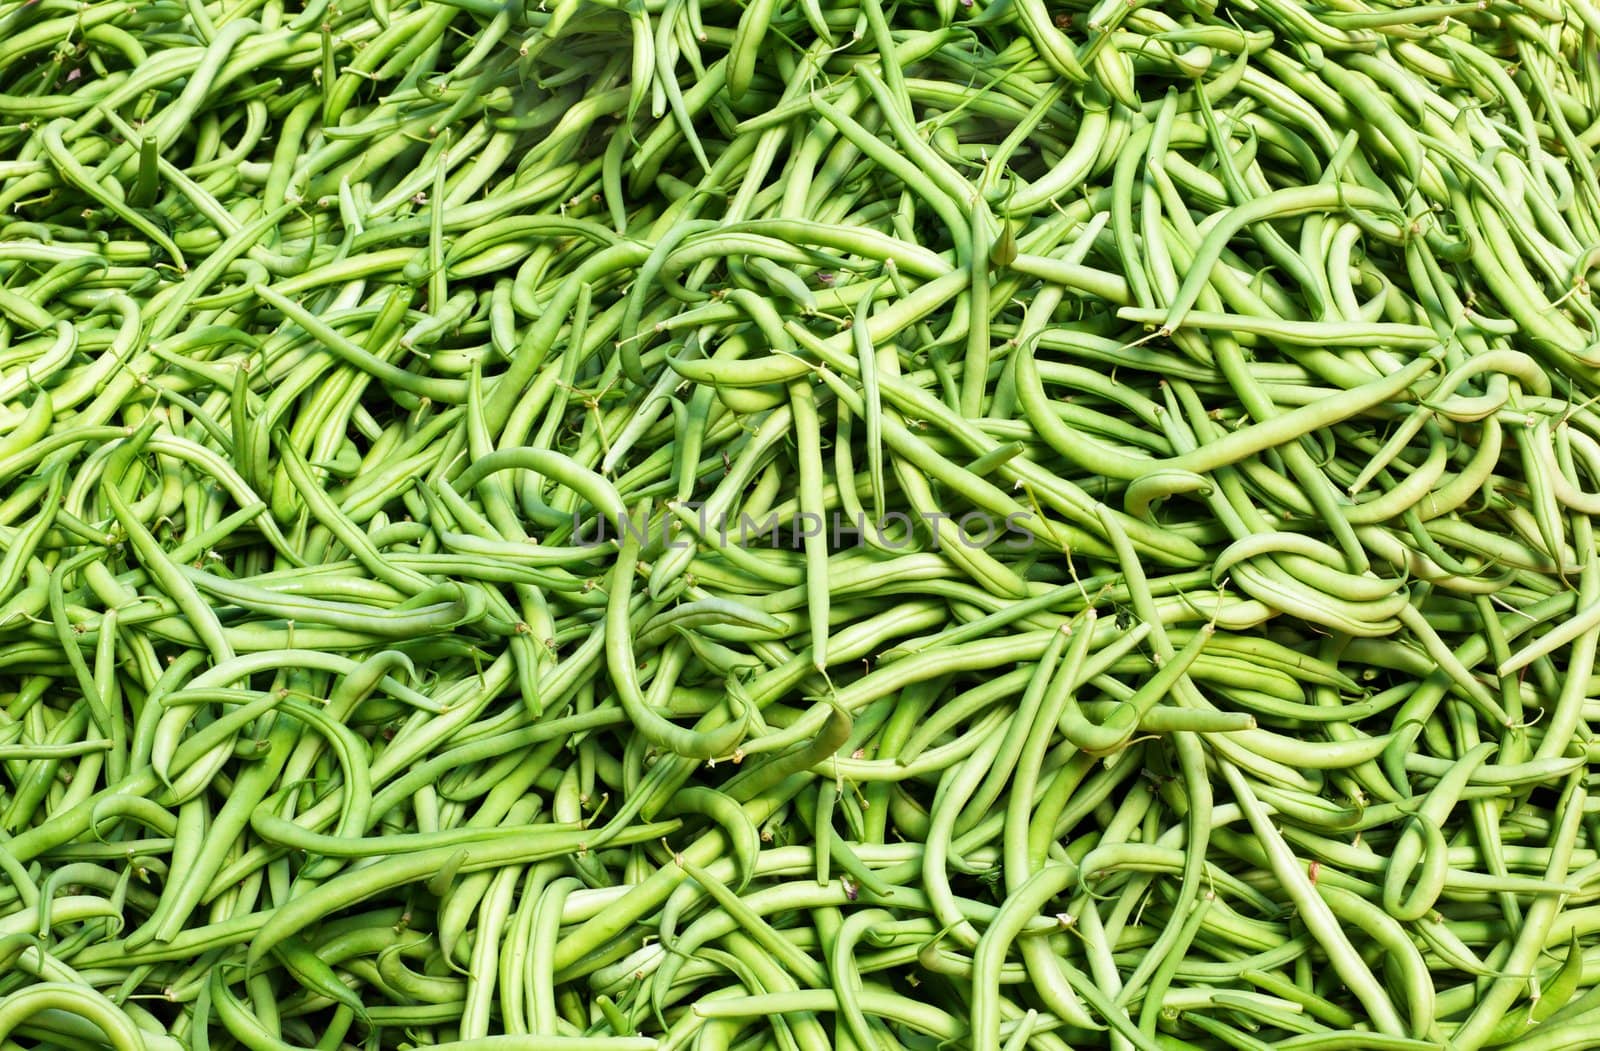 Green string Beans by bobkeenan